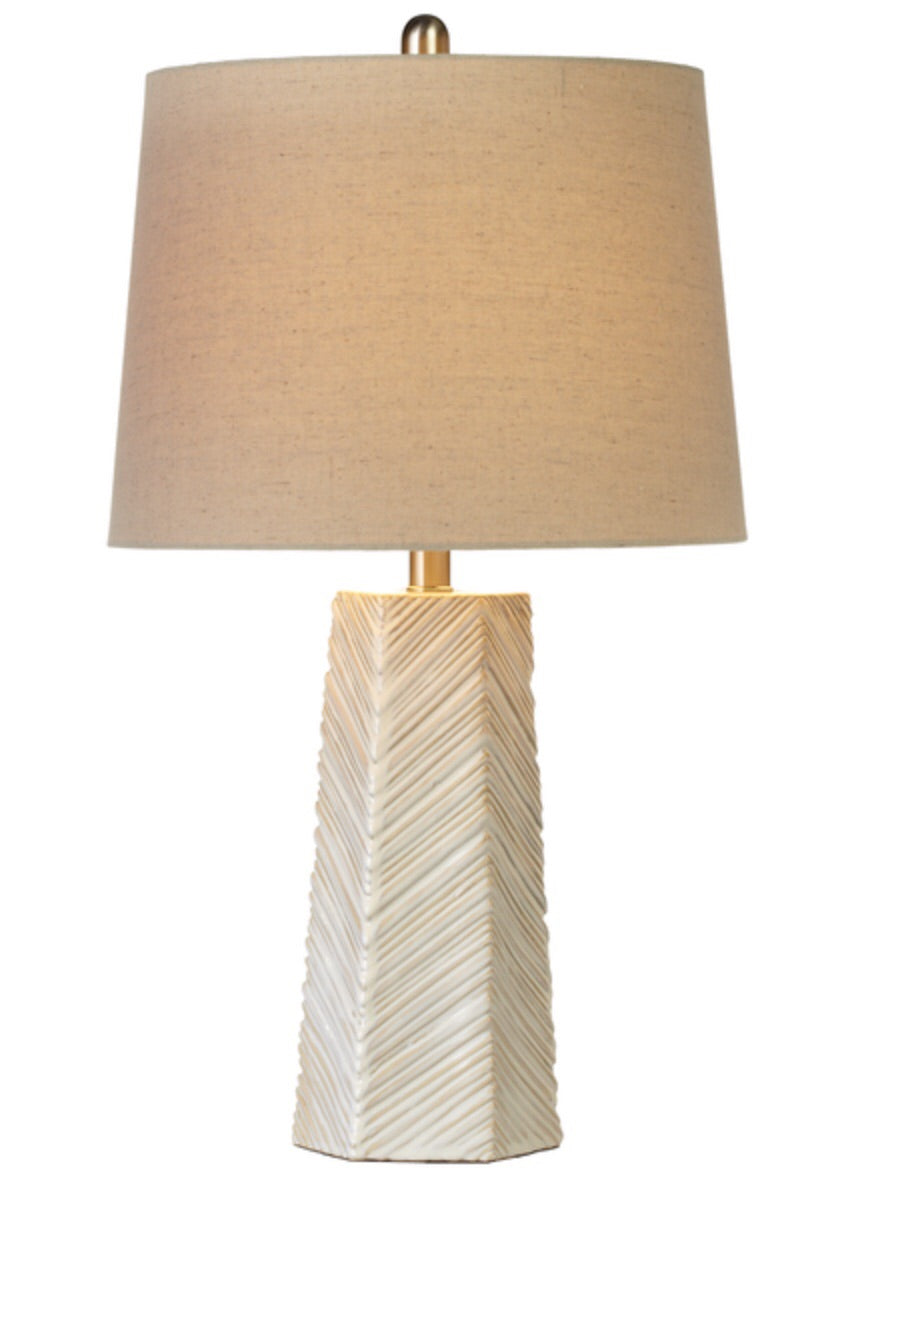 Ivory chevron base table lamp